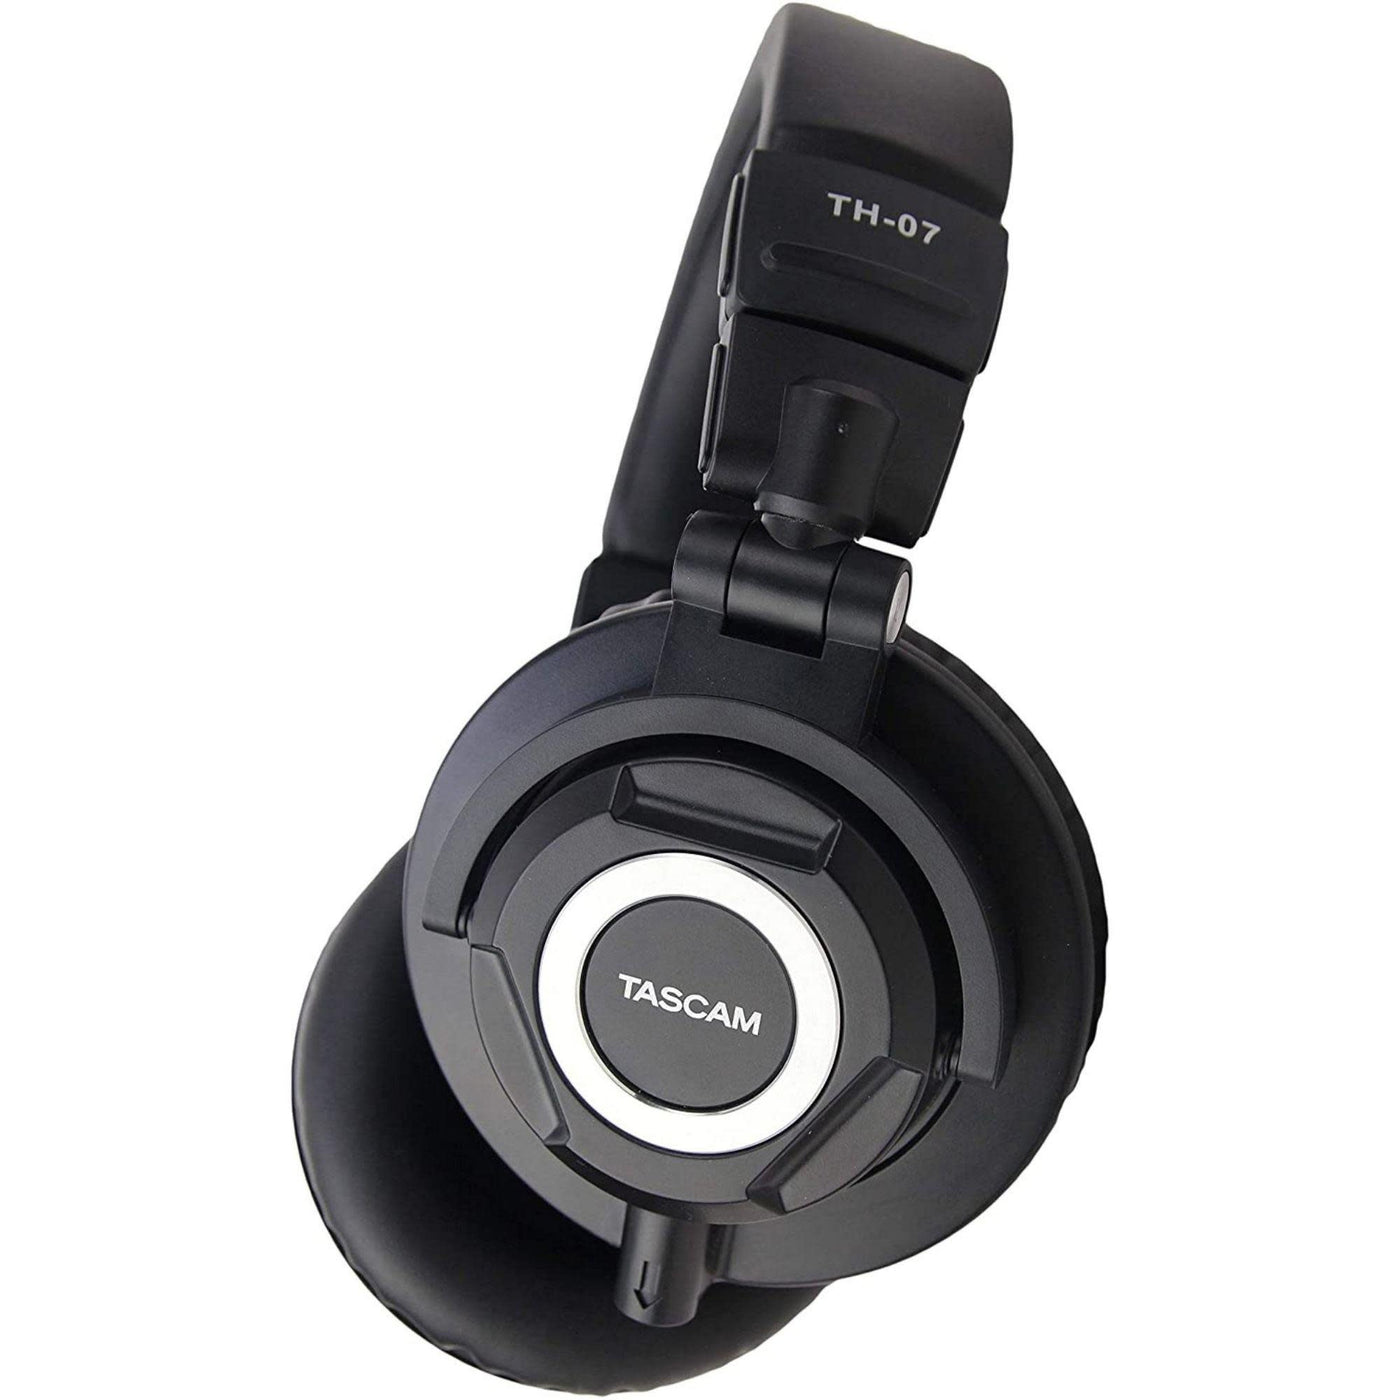 Tascam TH-07 High Definition Studio Monitor Headphones, Black